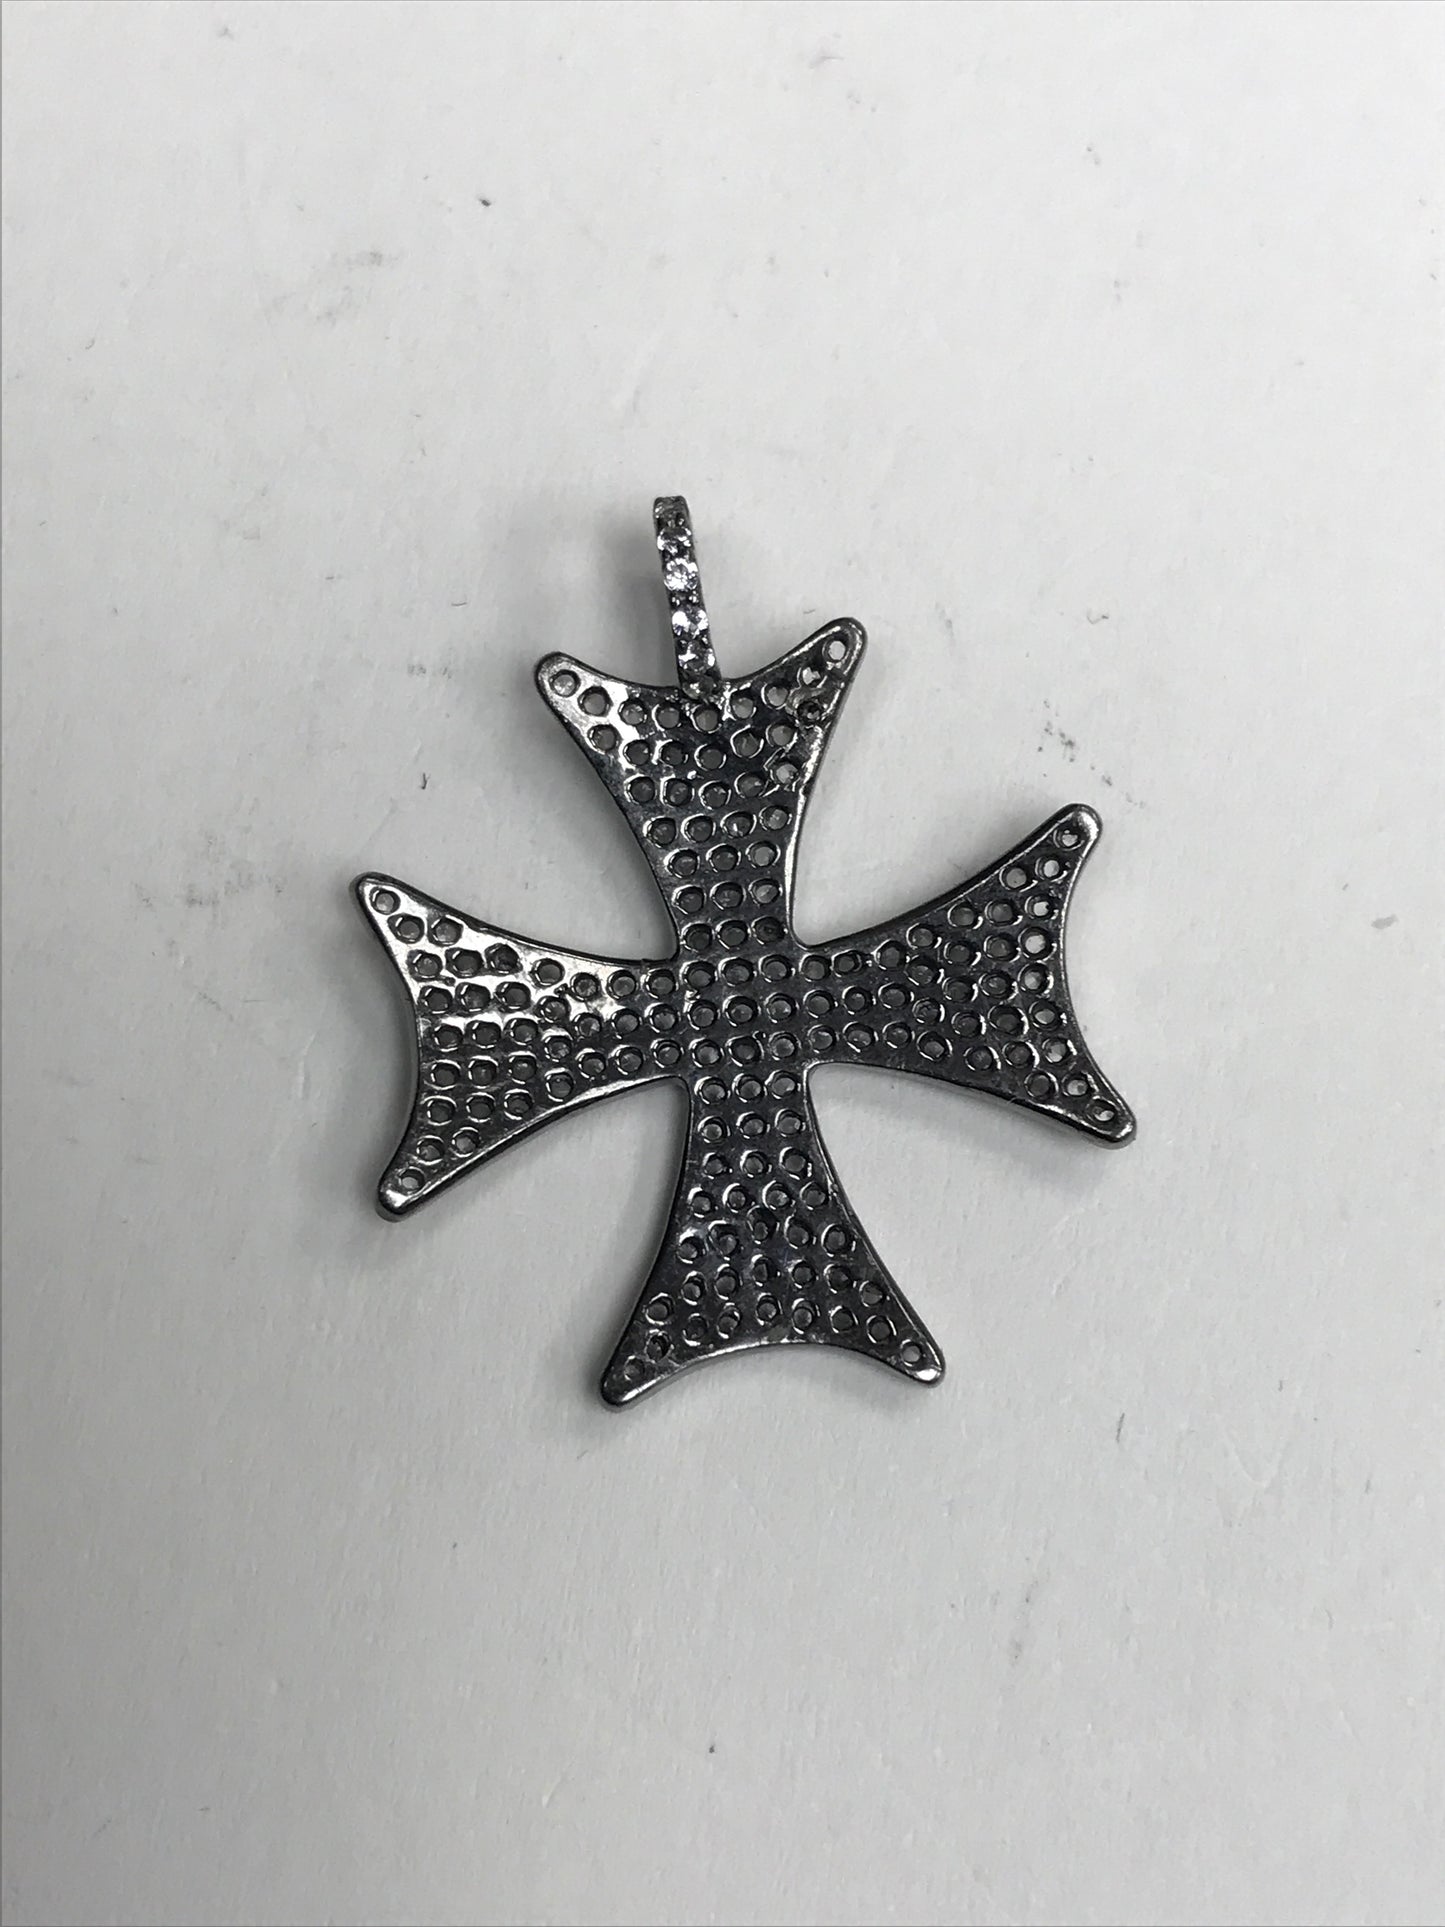 Maltese Cross Pendant ,Approx 1'' long(24 x 24mm) Oxidized Silver, Silver